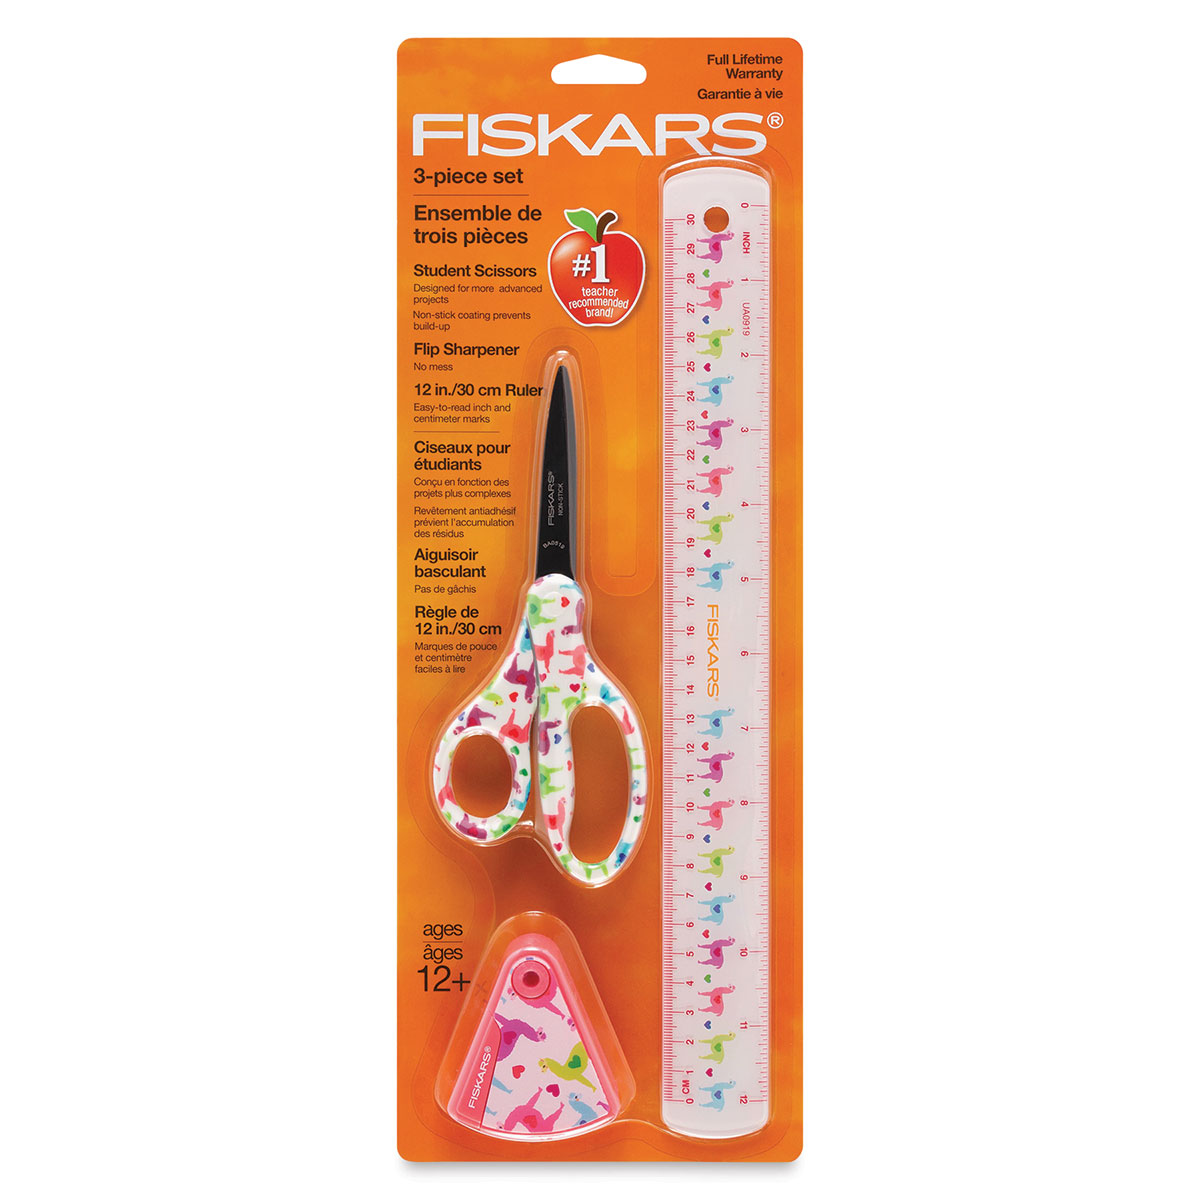 Fiskars Designer Child 3-Piece Set, 5 Scissors, 12 Ruler and Sharpener